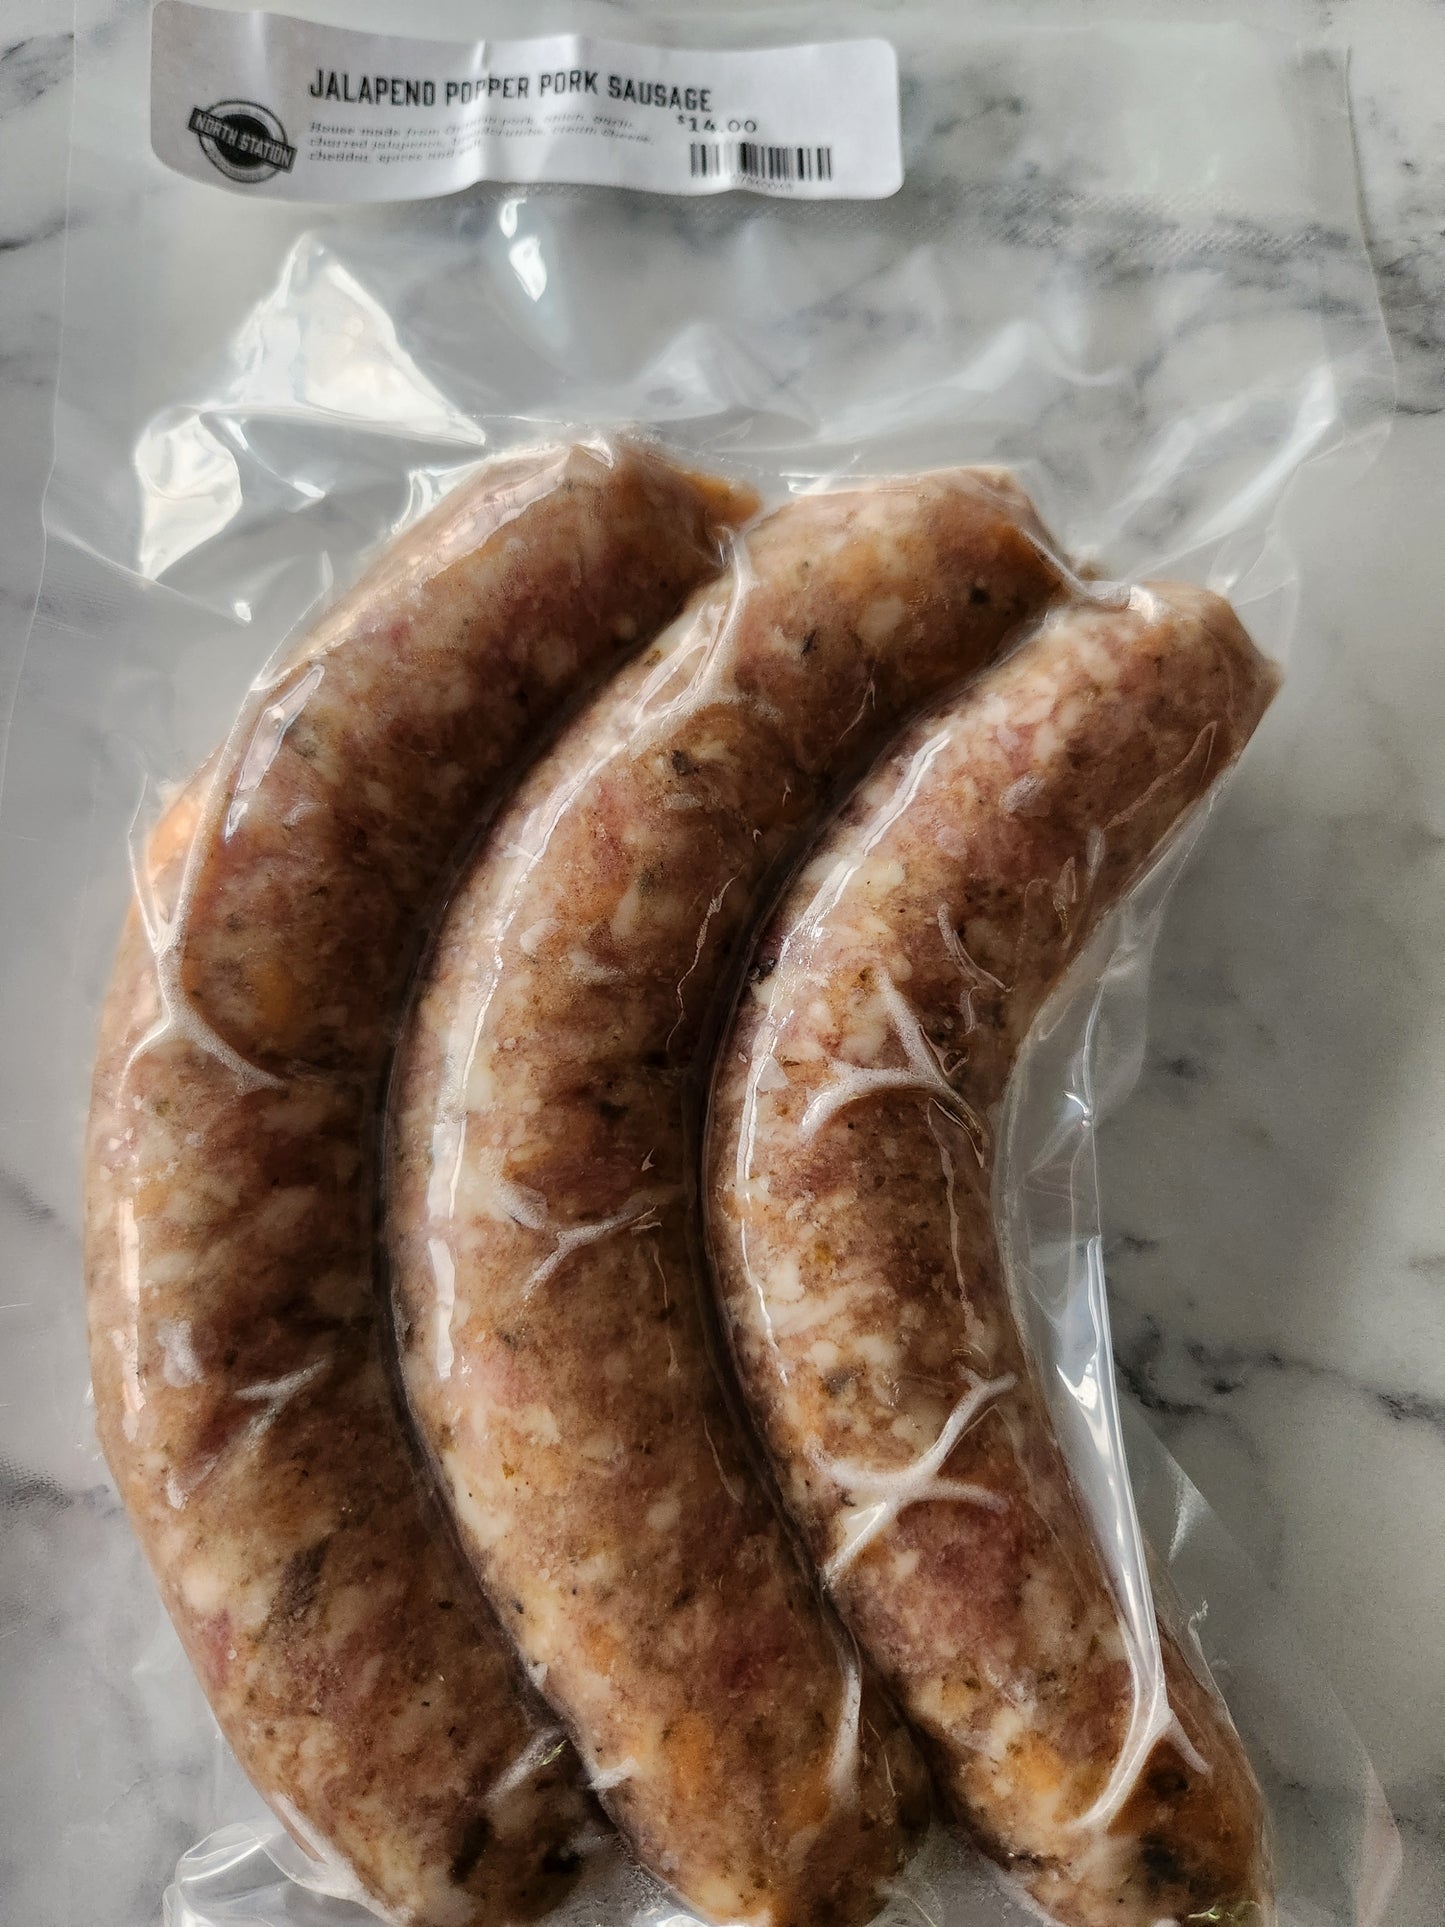 Jalapeno Popper Pork Sausage (3 pack)